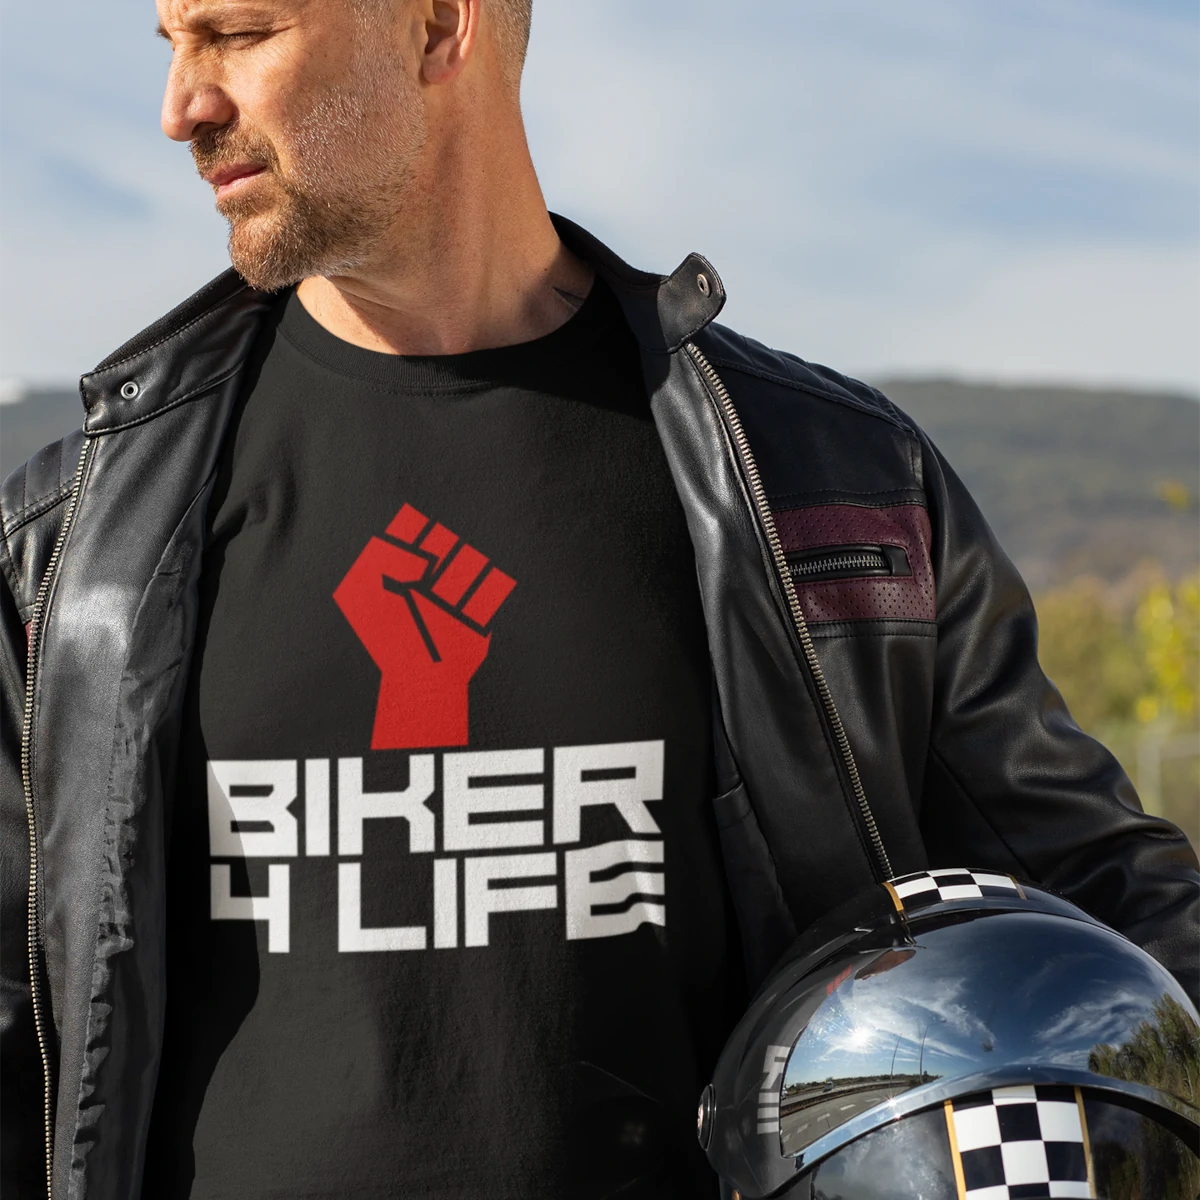 Tee-shirt homme Biker 4 Life - Accessoires Moto